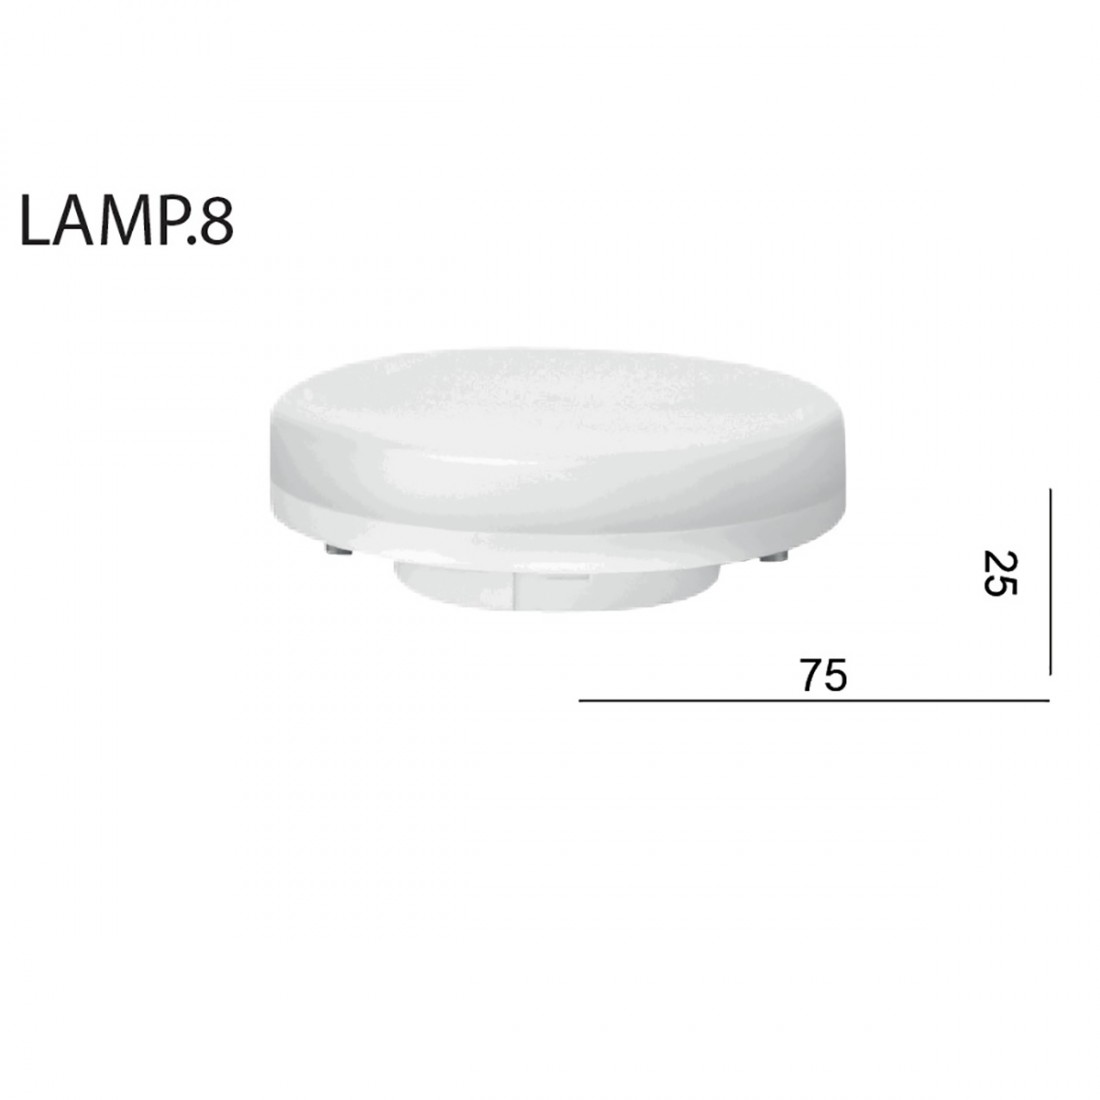 LED-Birne 6,5W Lampe 8 Toscot mit Bajonettanschluss Gx53, 220V